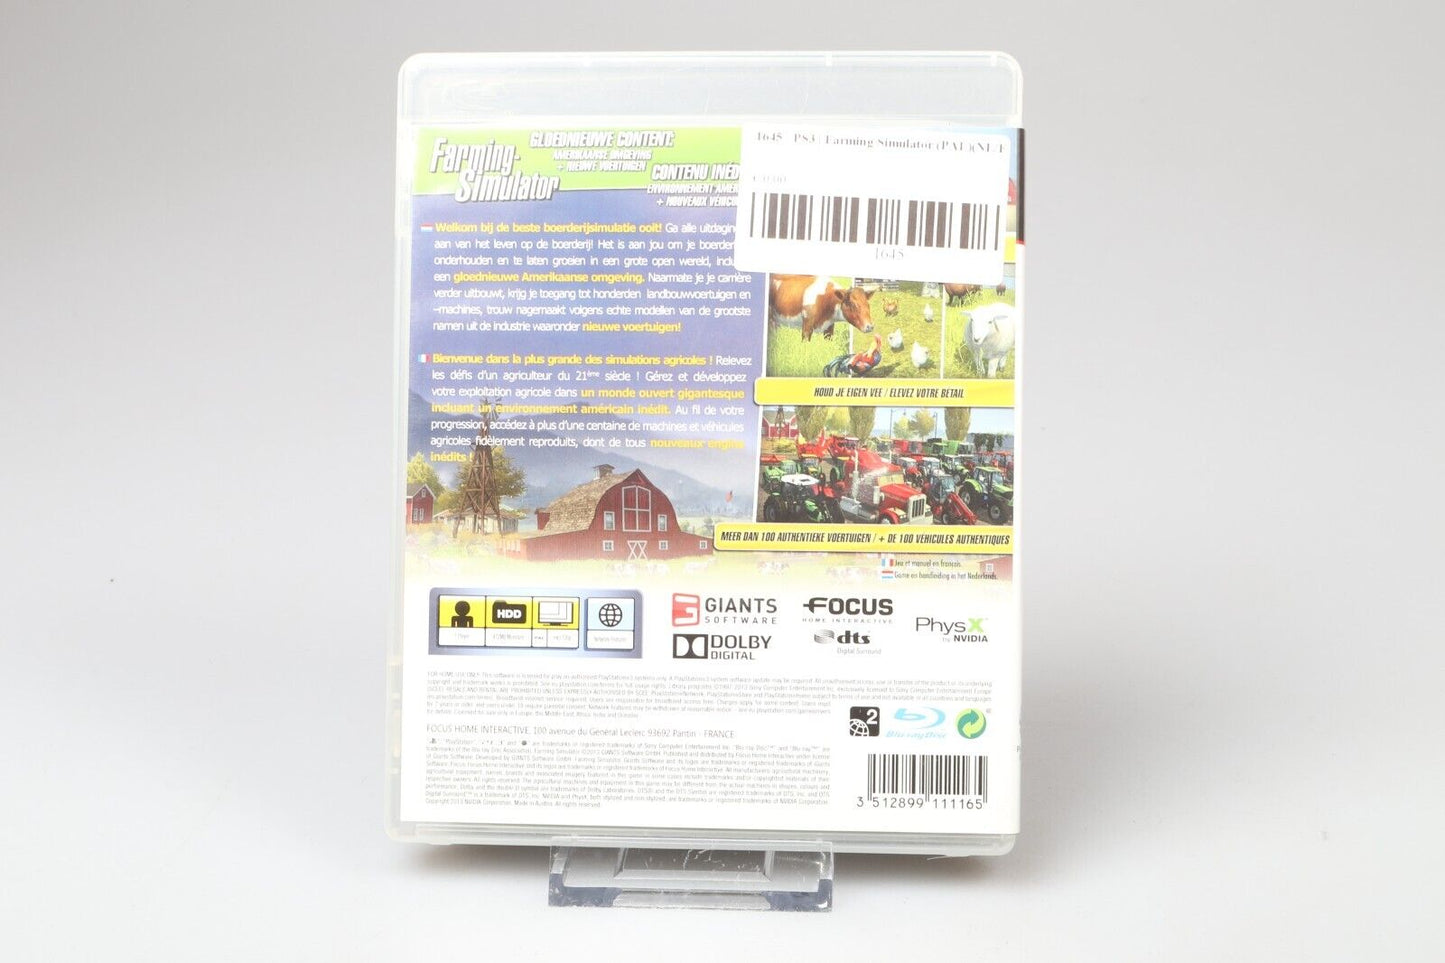 PS3 | Farming Simulator (PAL)(NL/FR)